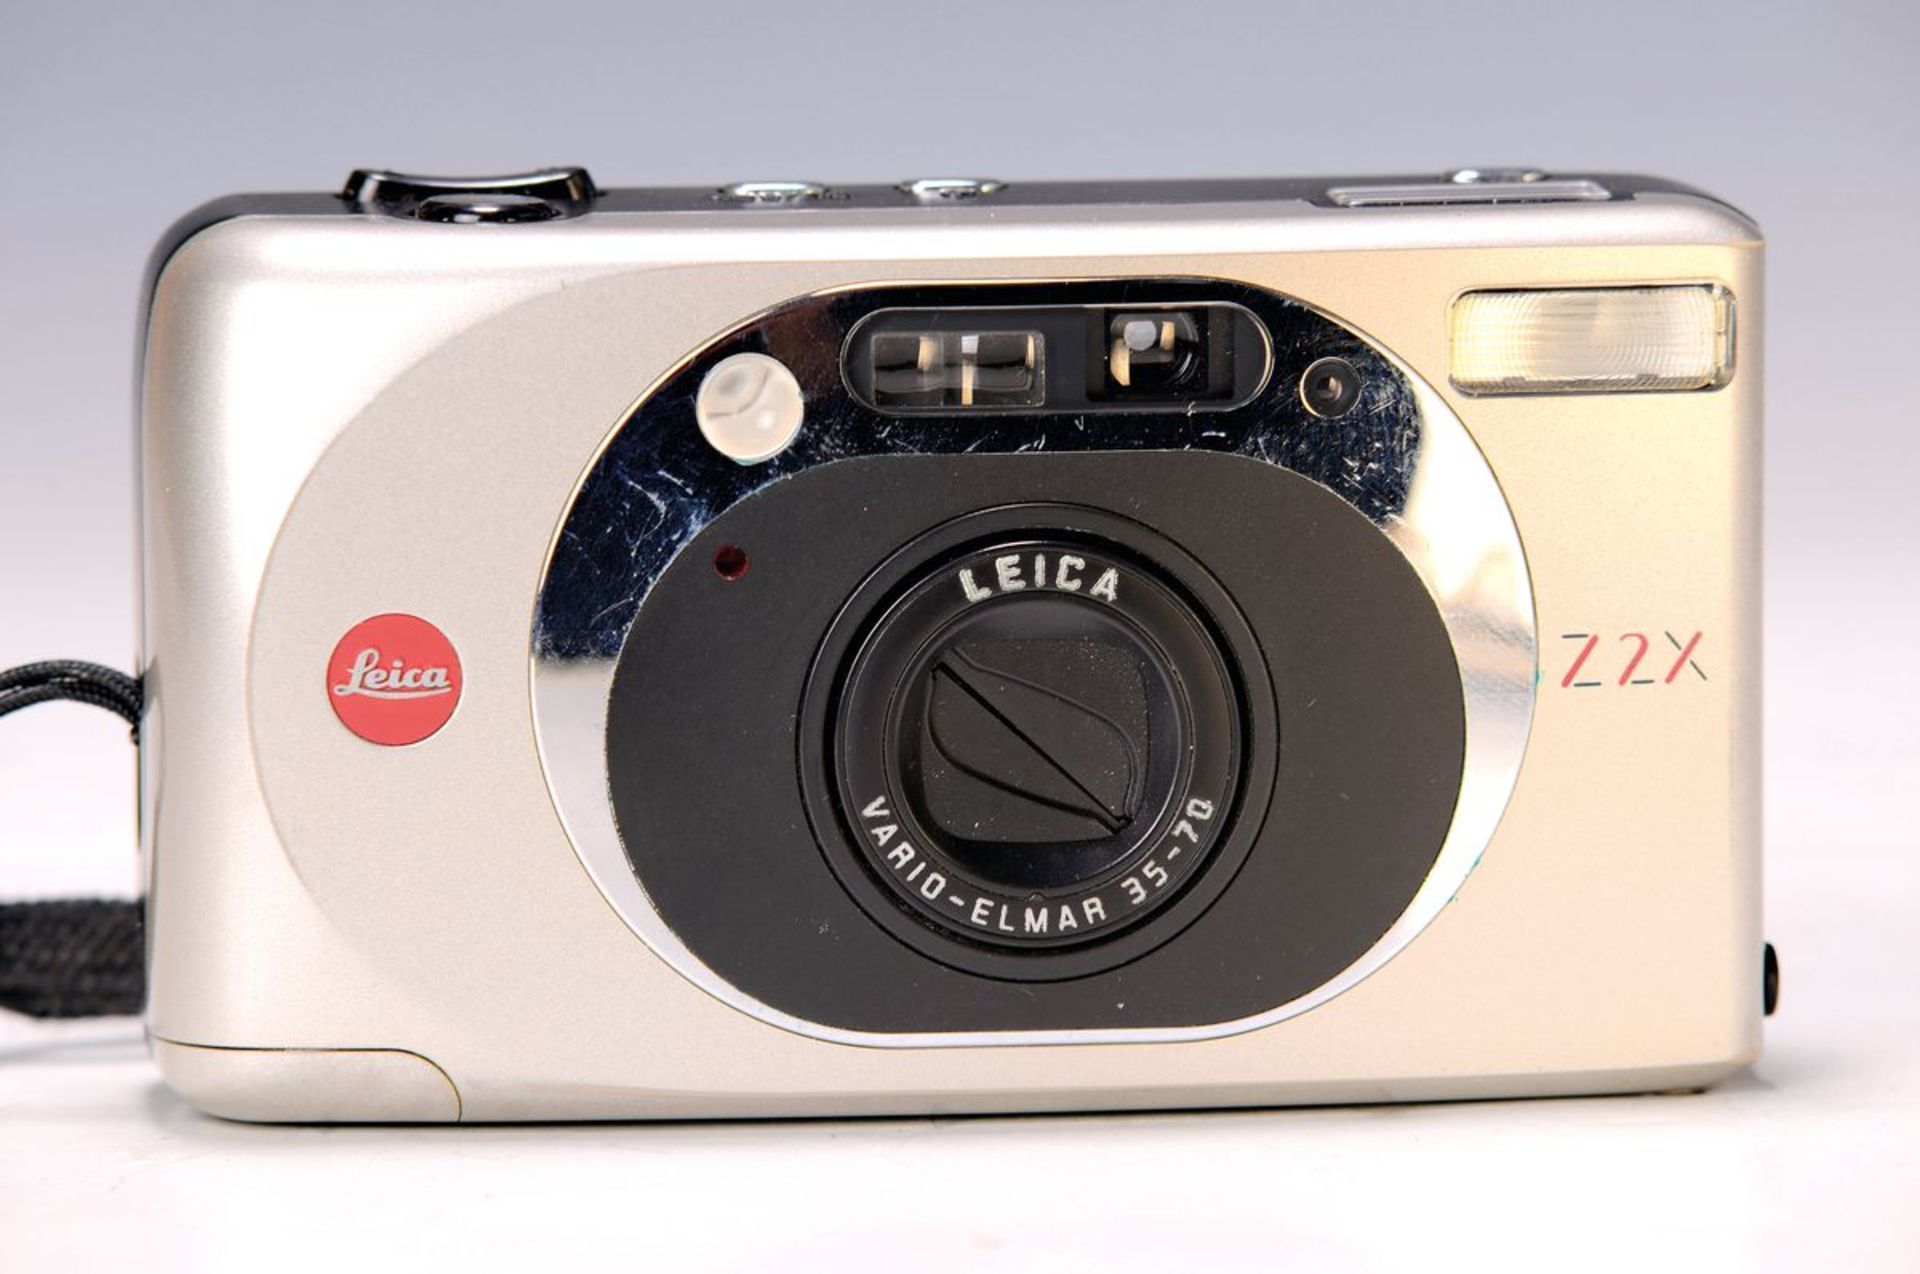 Kompaktkamera Leica Z2X, verbautes Objektiv Vario-Elmar